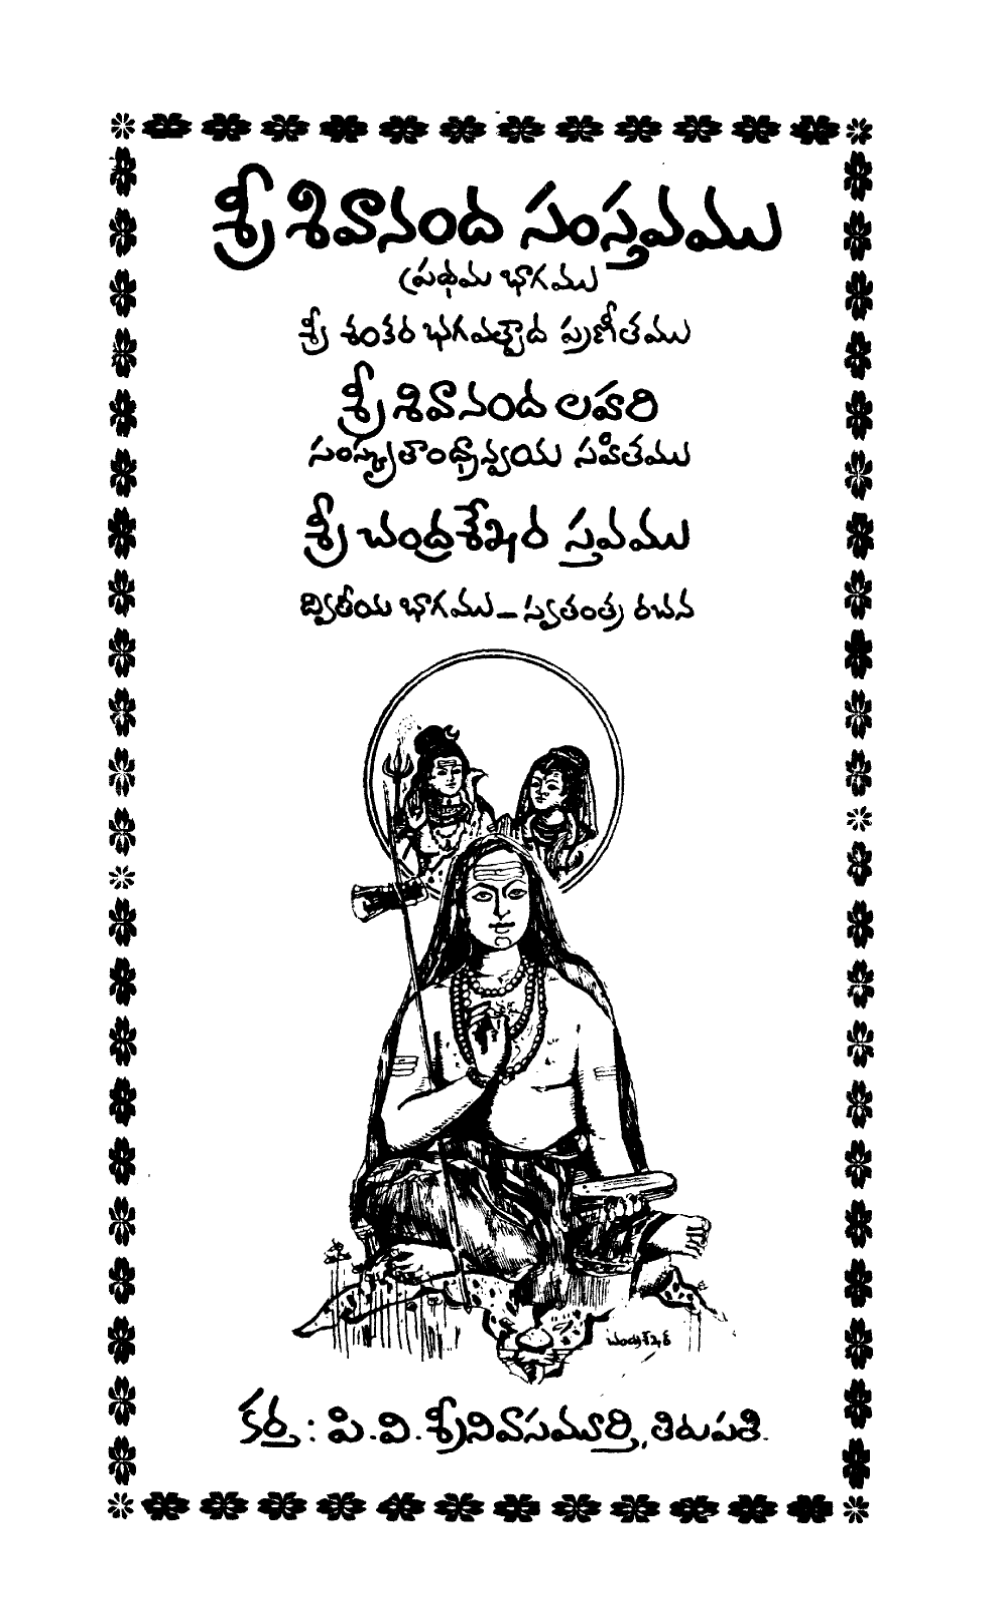 Sri Sivananda Sanstavamu Prathama Bhagamu